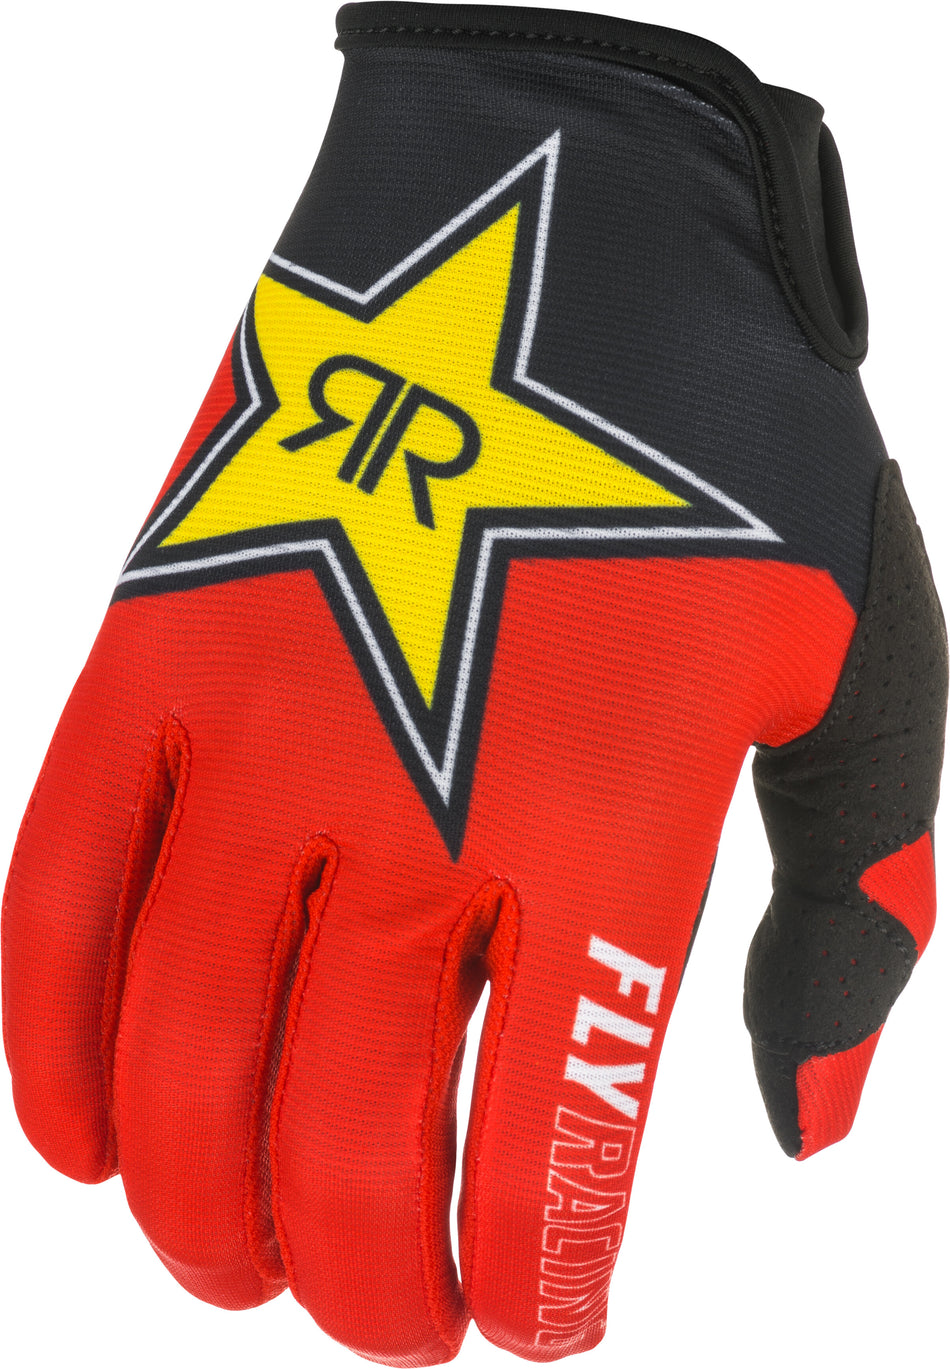 FLY RACING Lite Rockstar Gloves Black/Red/Yellow Sz 11 374-01311